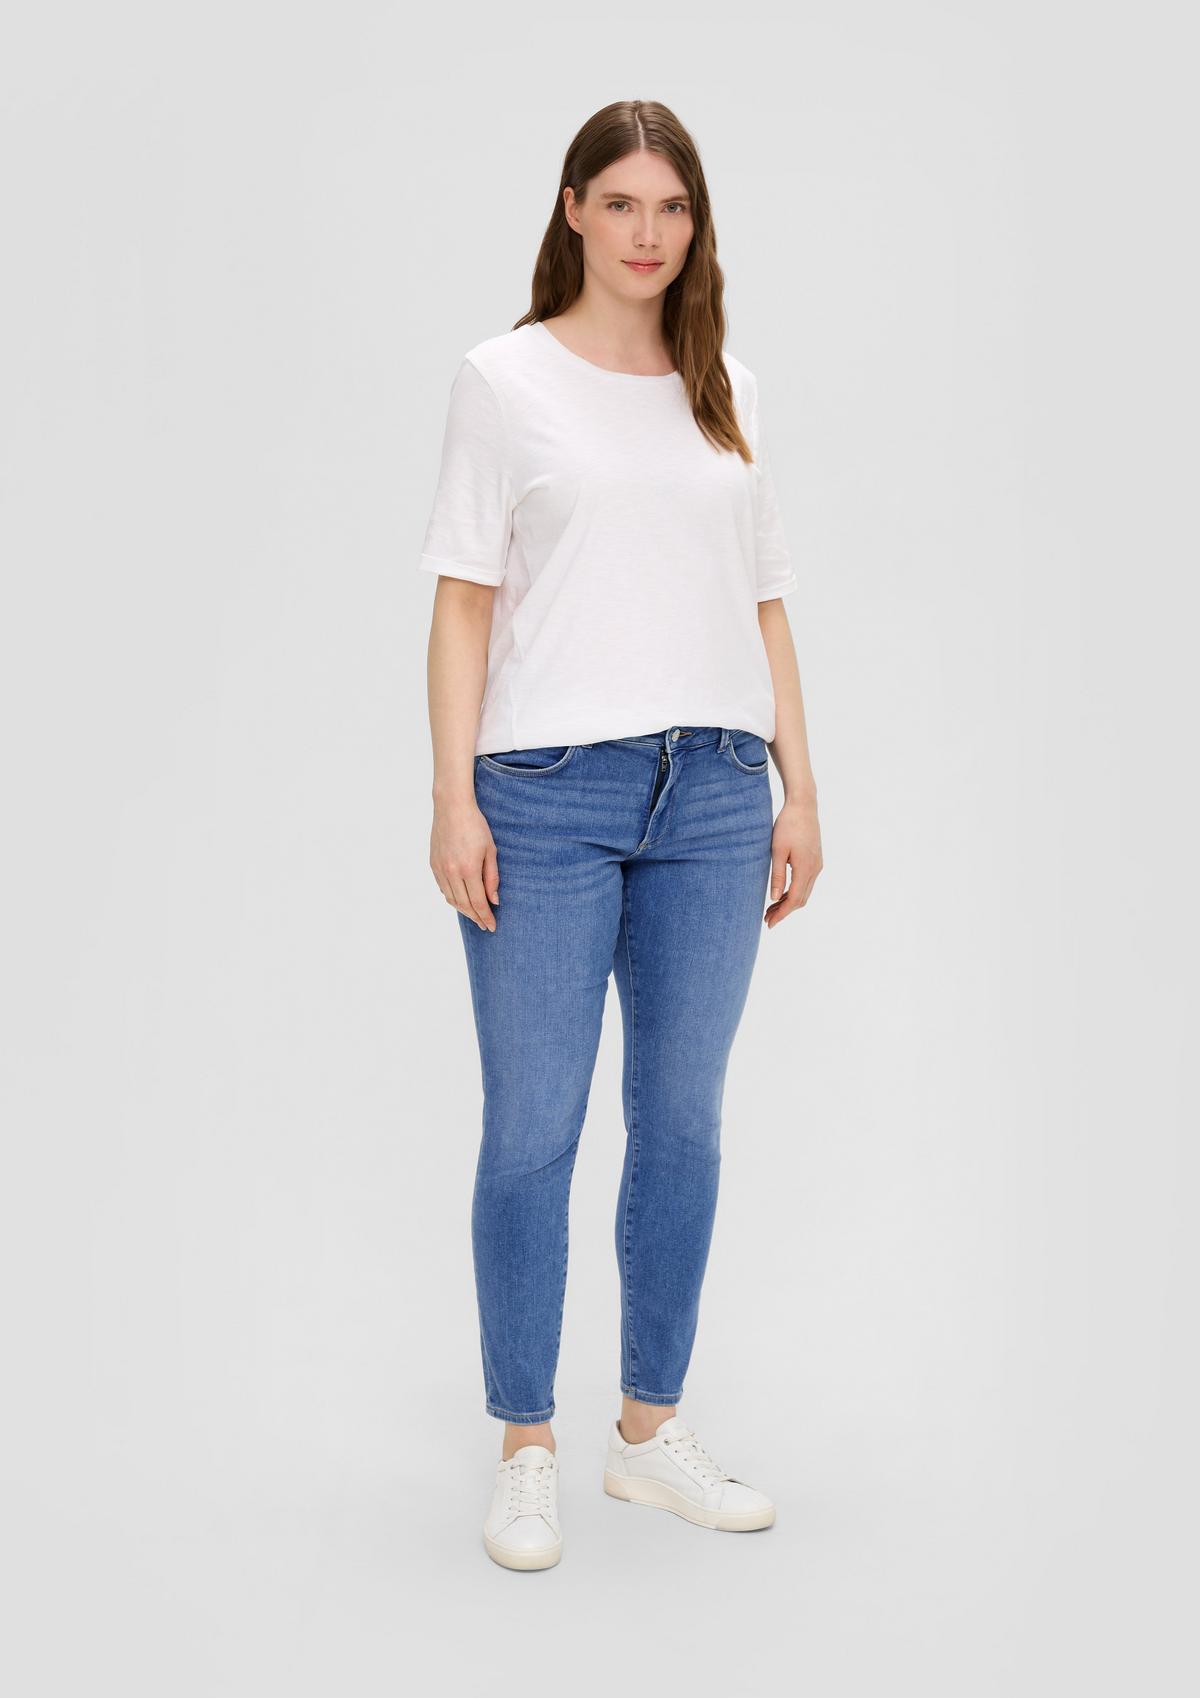 Jeans Anny / mid rise / skinny leg